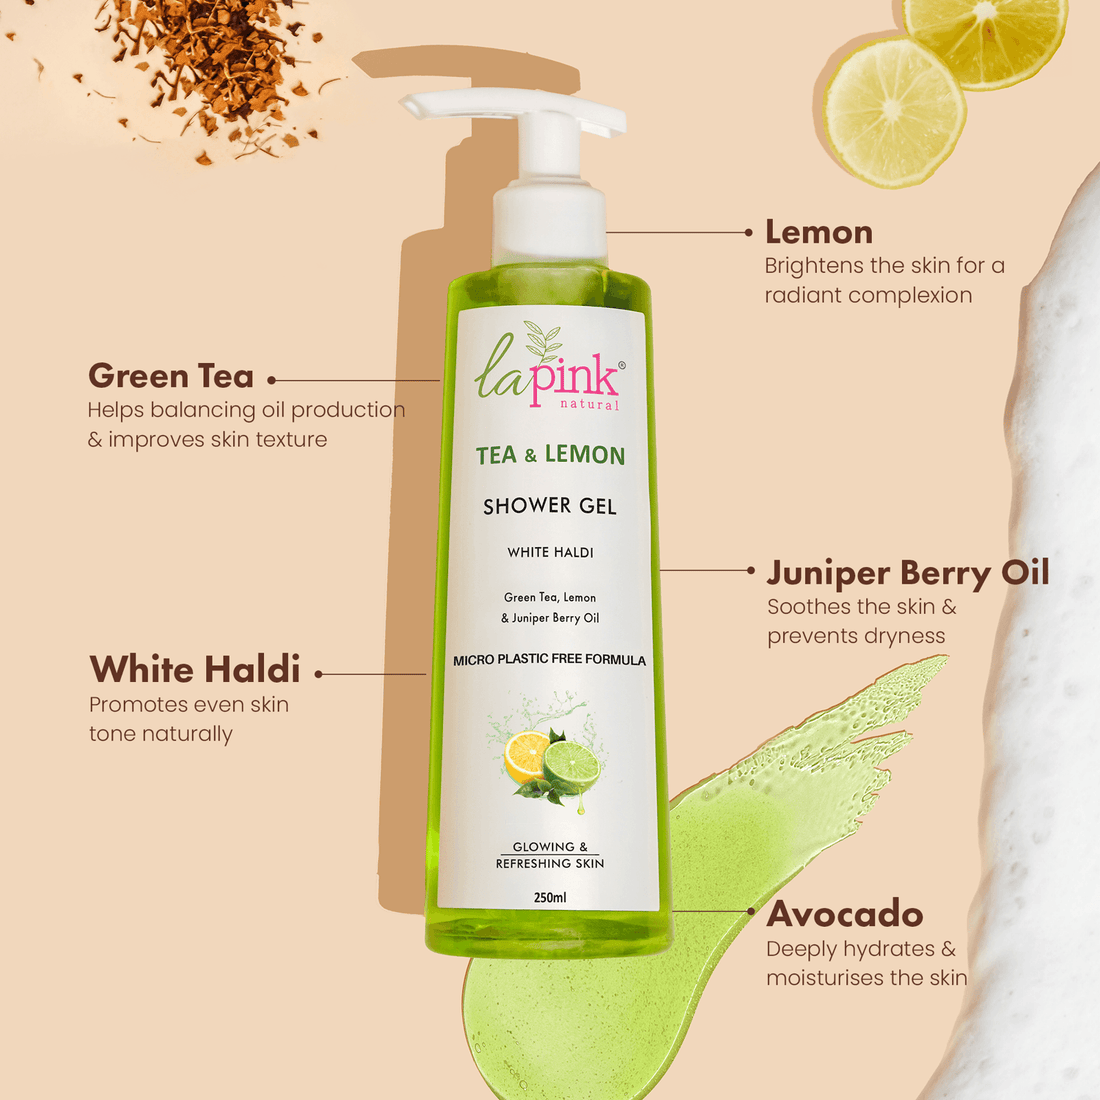 Tea &amp; Lemon Shower Gel with White Haldi for Glowing and Refreshing Skin - La Pink